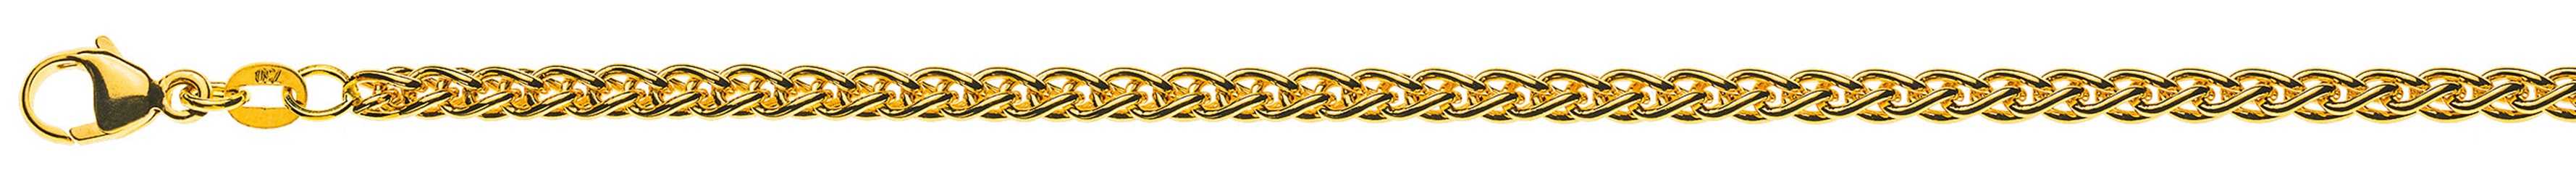 AURONOS Prestige Necklace yellow gold 18K cable chain 55cm 3.3mm